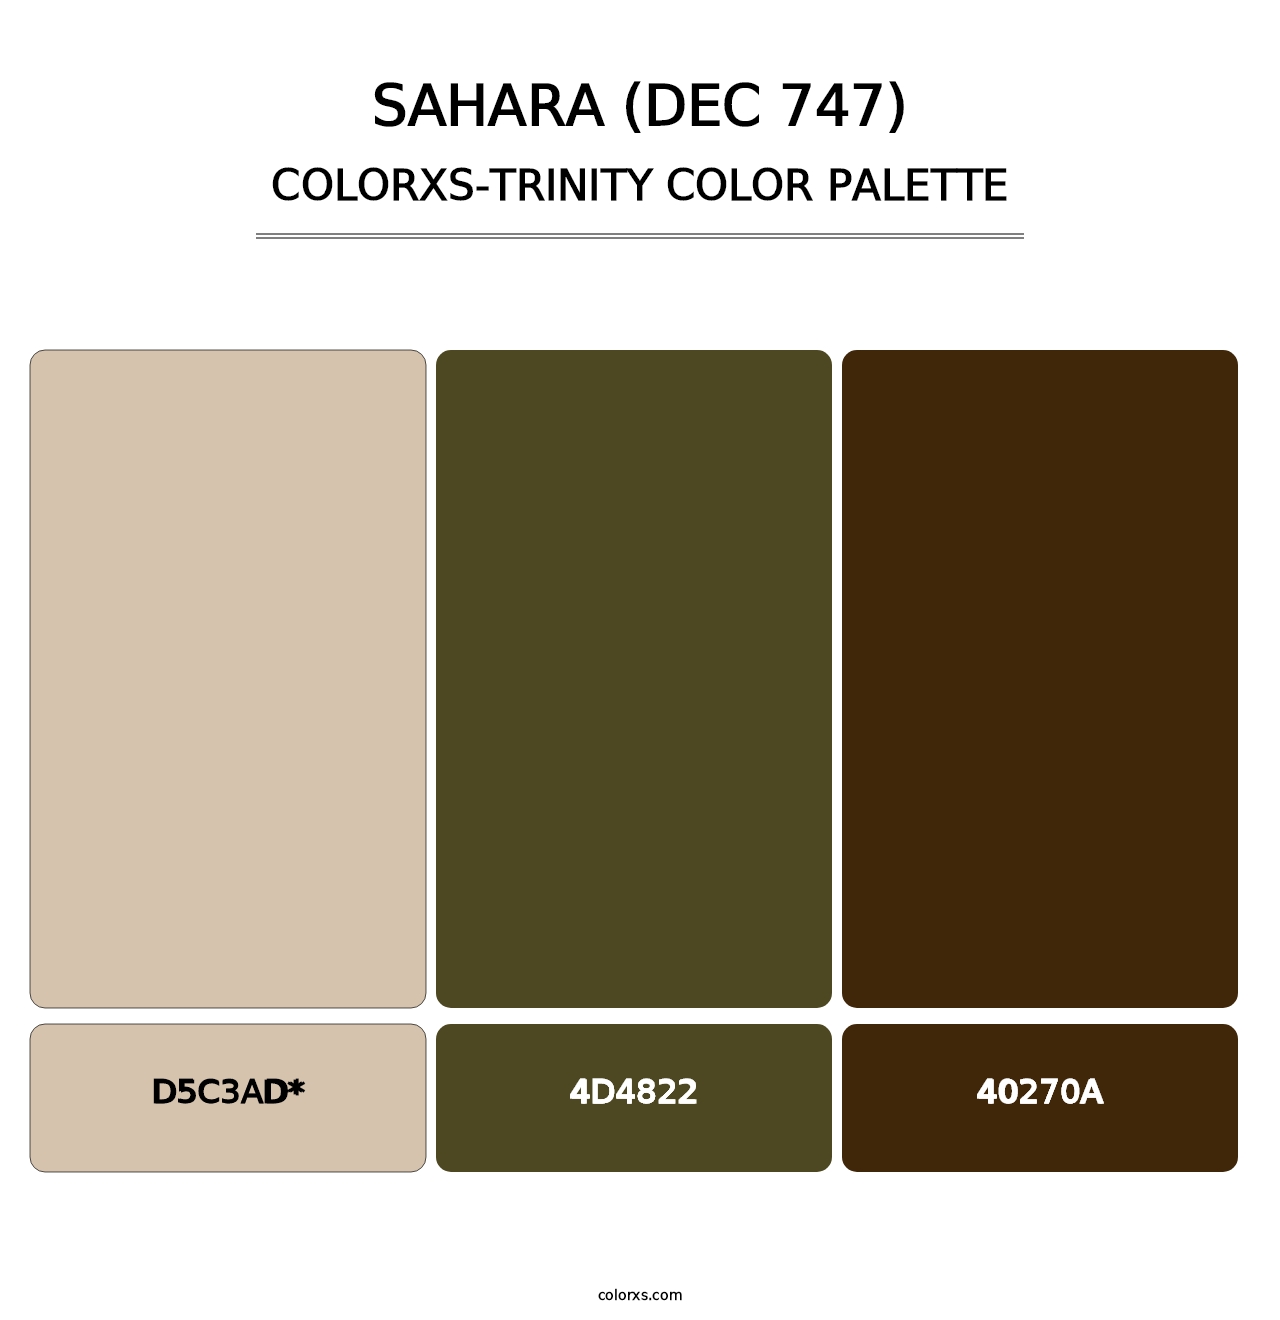 Sahara (DEC 747) - Colorxs Trinity Palette